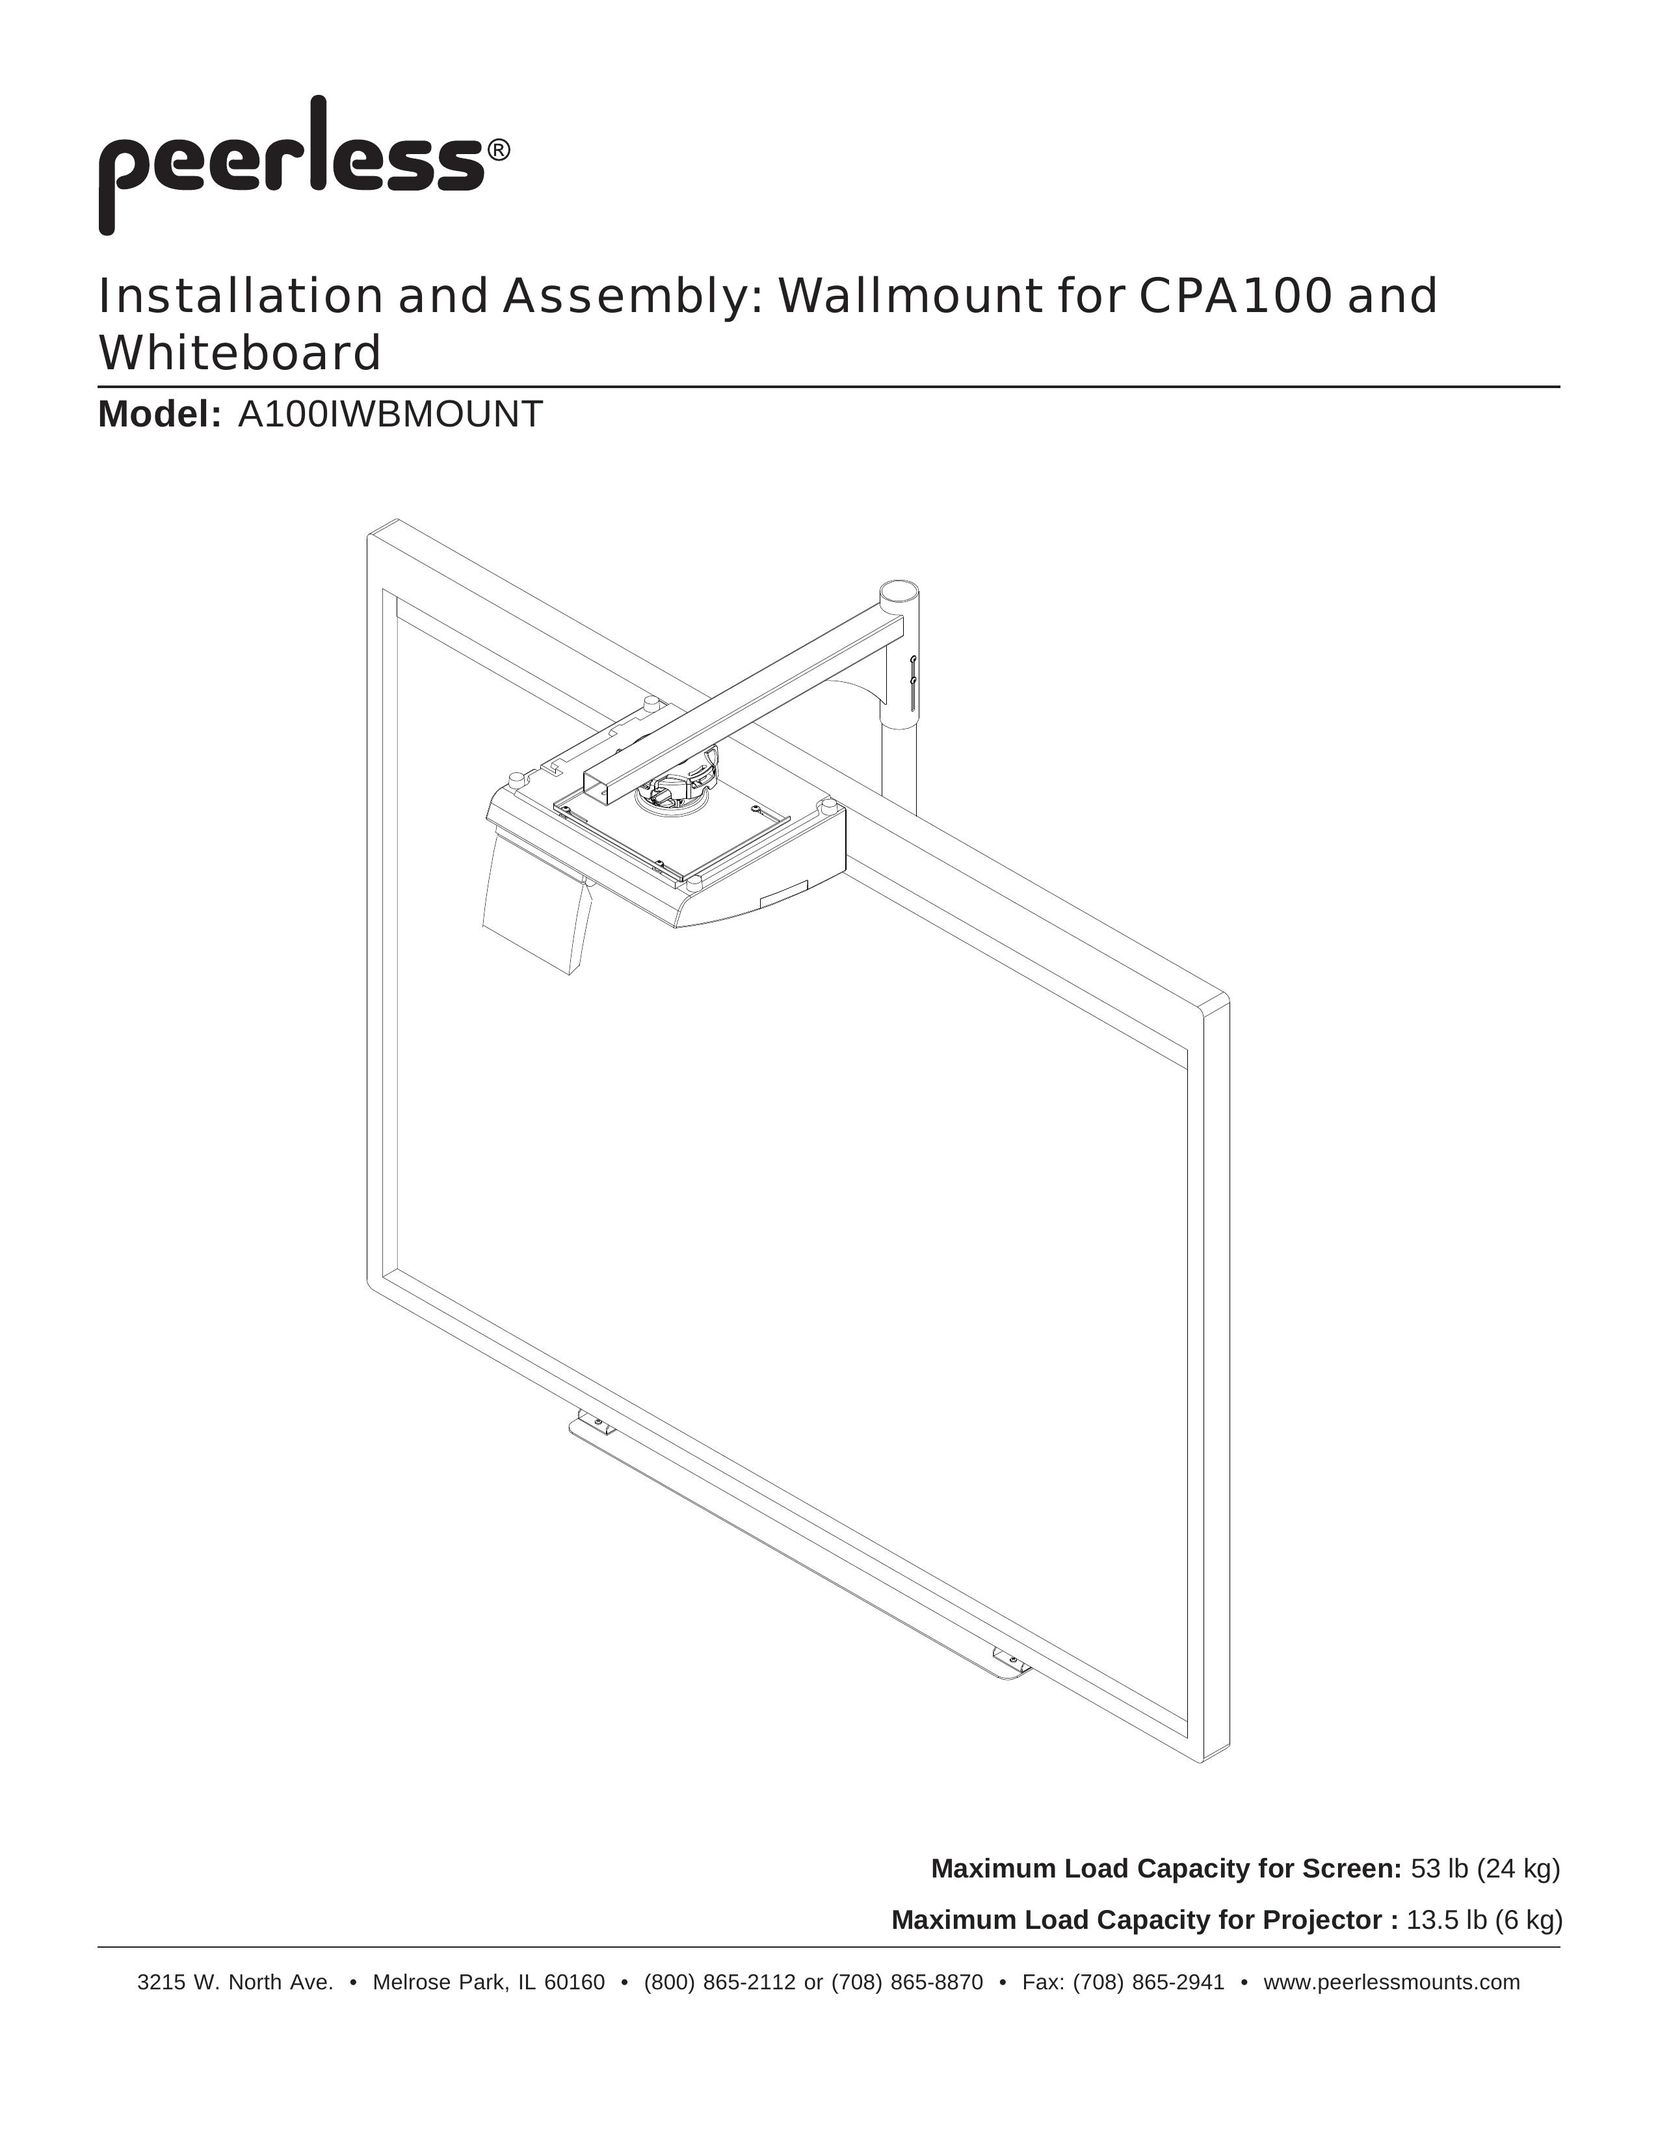 Peerless Industries A100IWBMOUNT Whiteboard Accessories User Manual